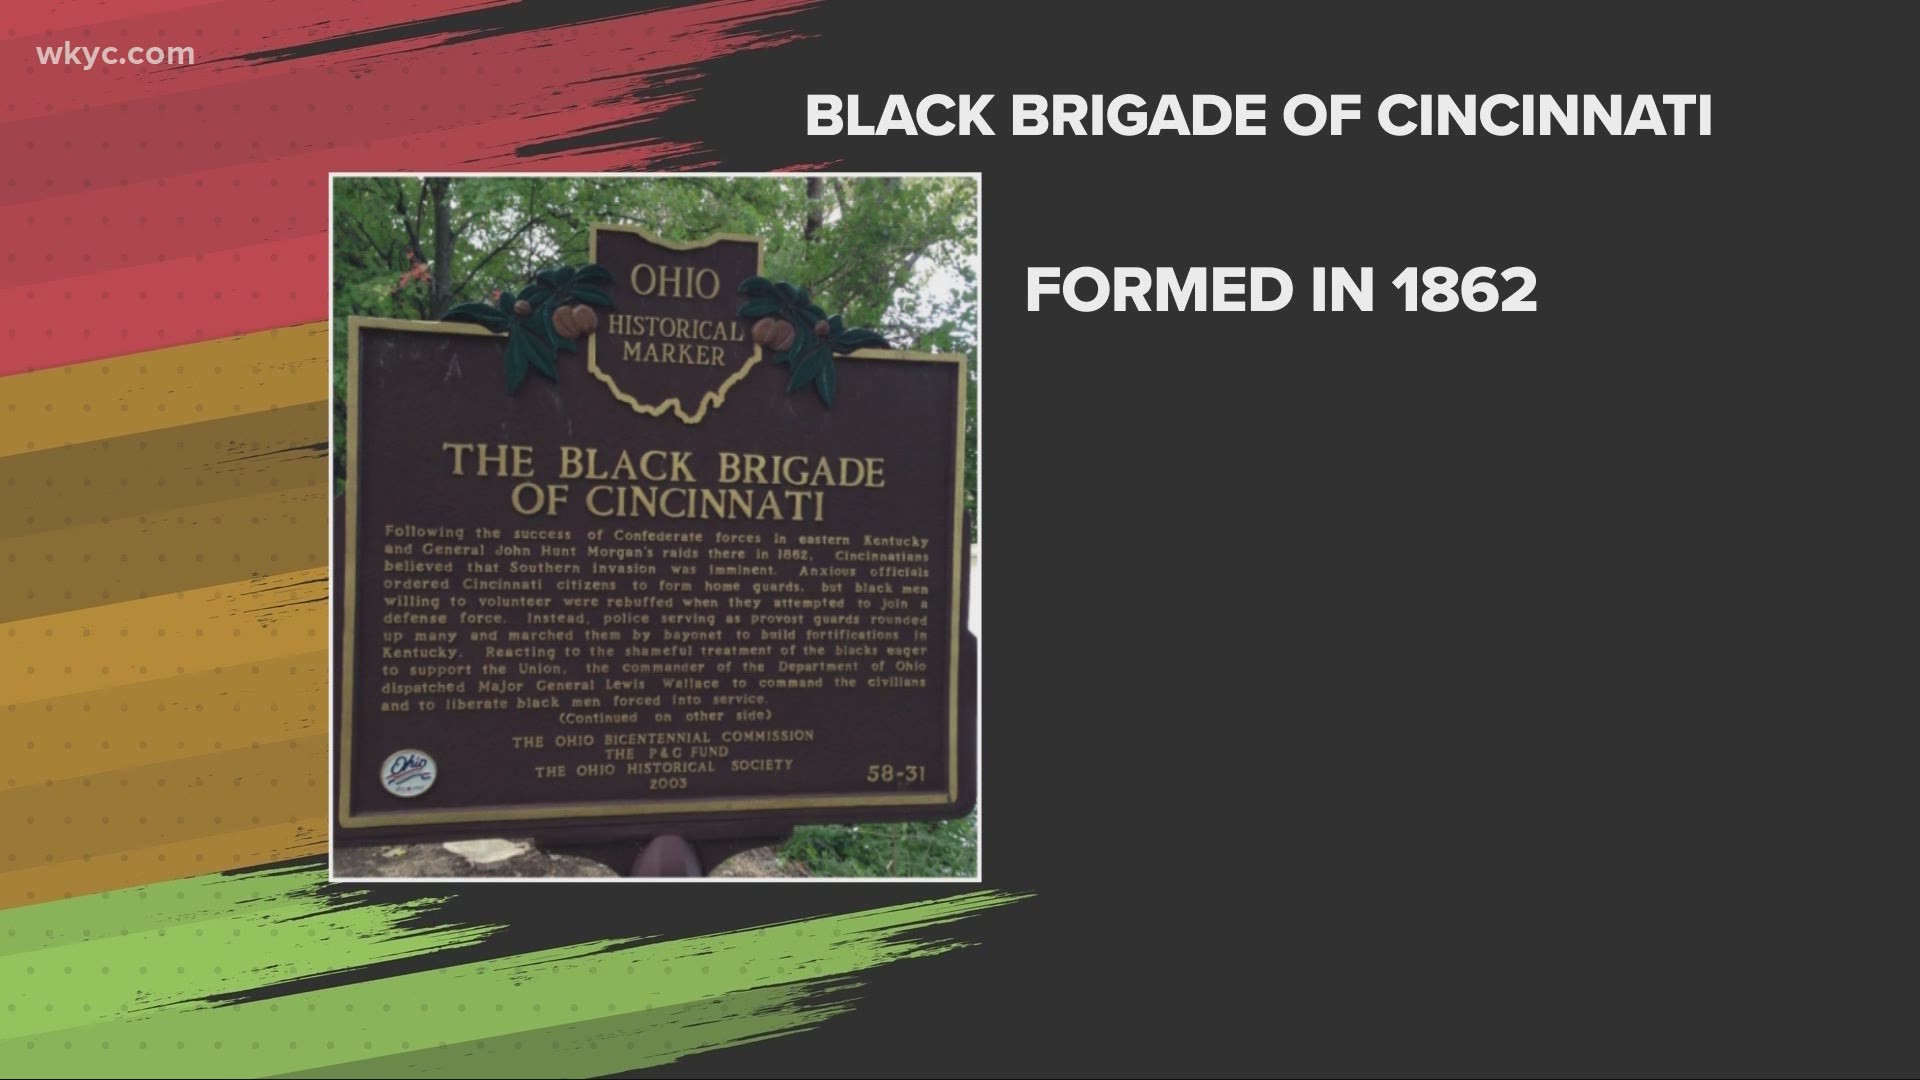 During the Civil War, Confederate Gen. John Hunt Morgan was planning to attack Cincinnati in 1862. In response, the Black Brigade of Cincinnati was formed.